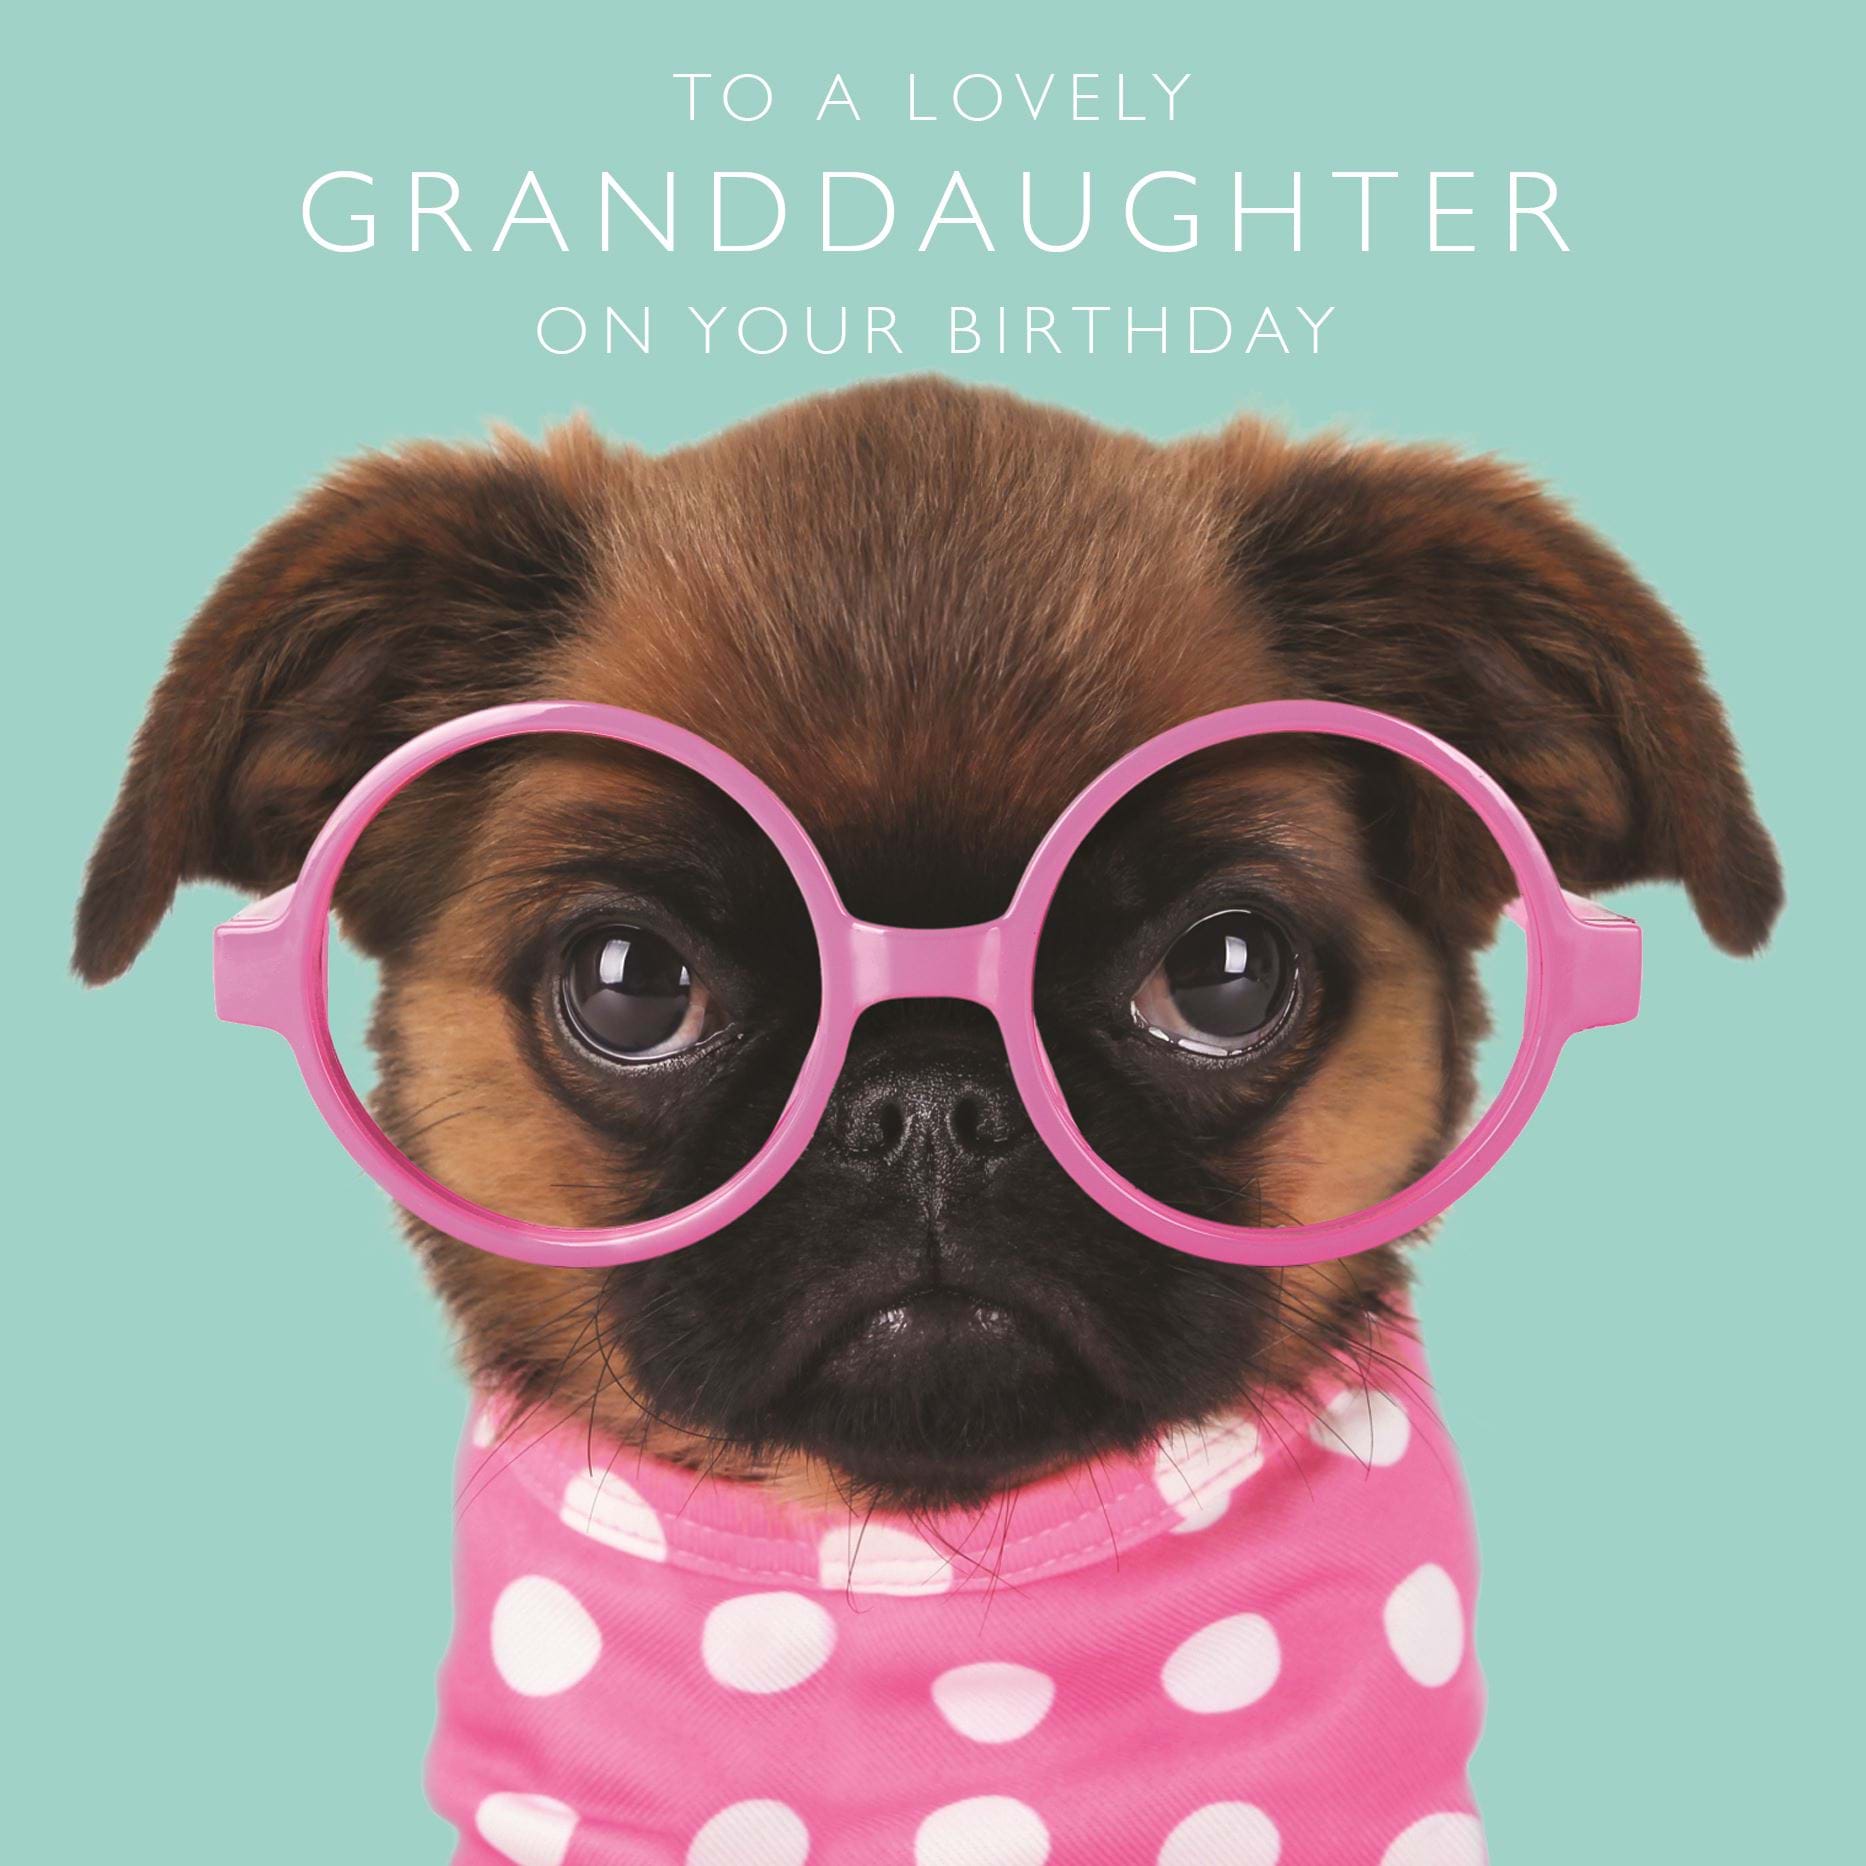 Polka Dot Dog Granddaughter Birthday Card